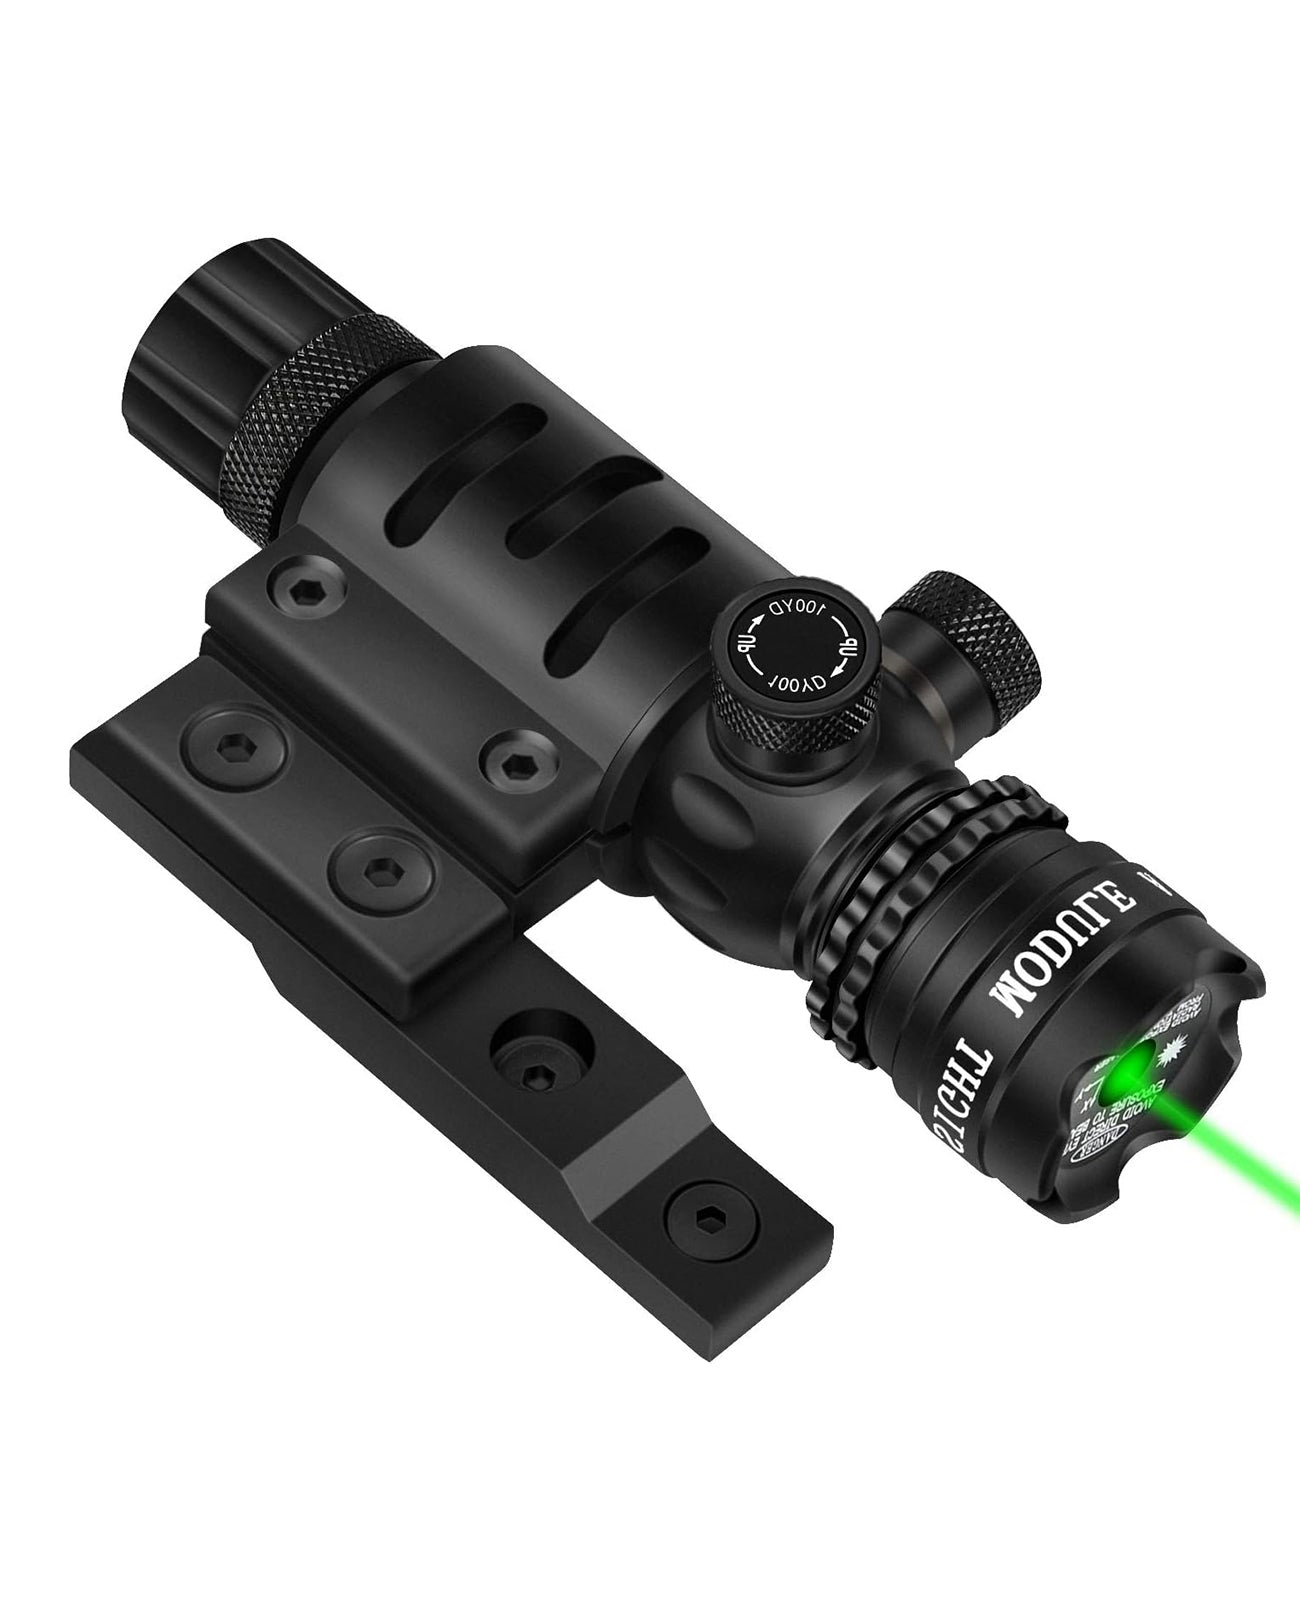 EZshoot Mlok Green Laser Sight 532nm Gun Laser for M-Rail Mount